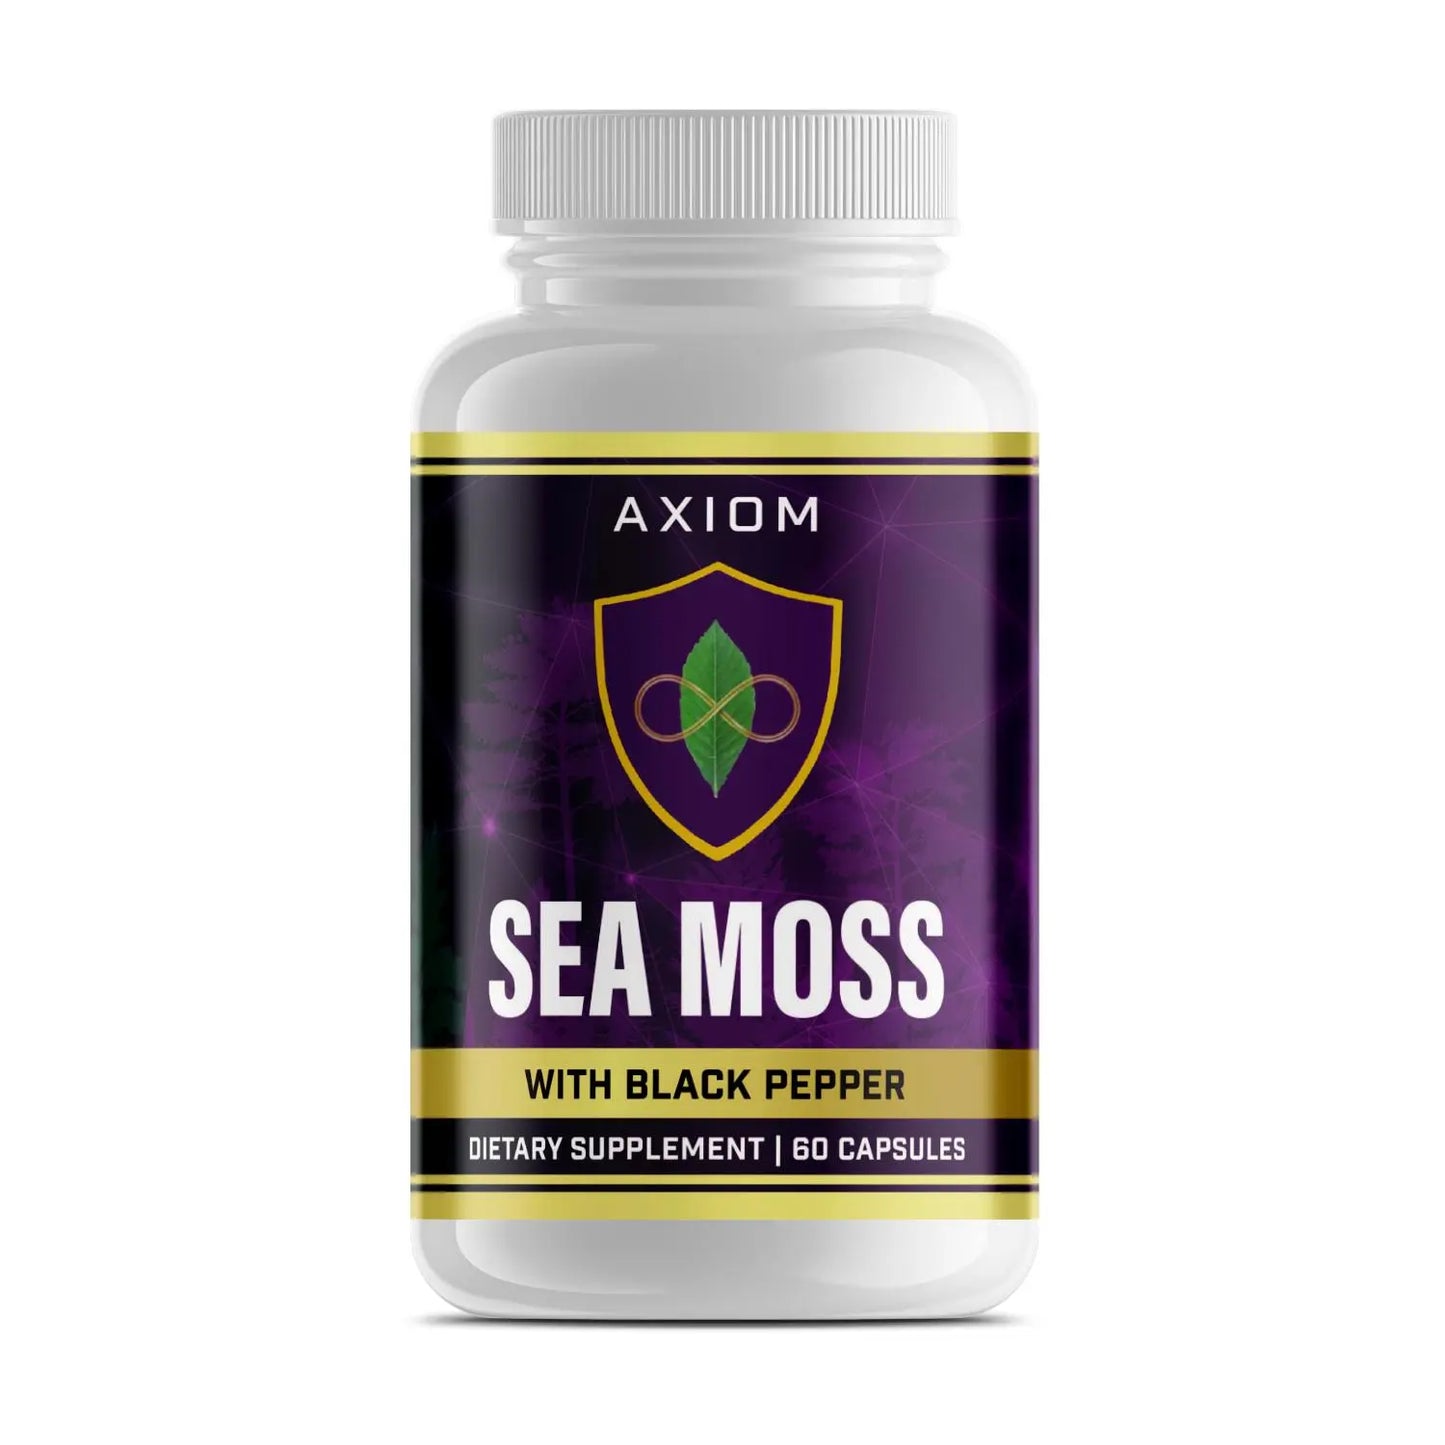 Sea Moss Axiomsupplements